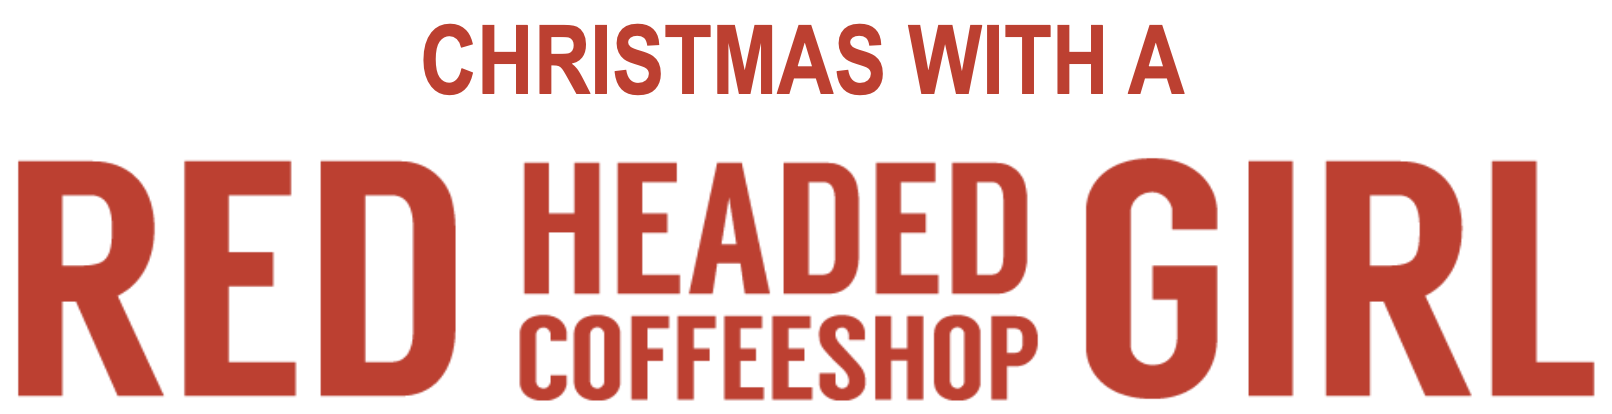 Christmas with a Redheaded Coffeeshop Girl logo